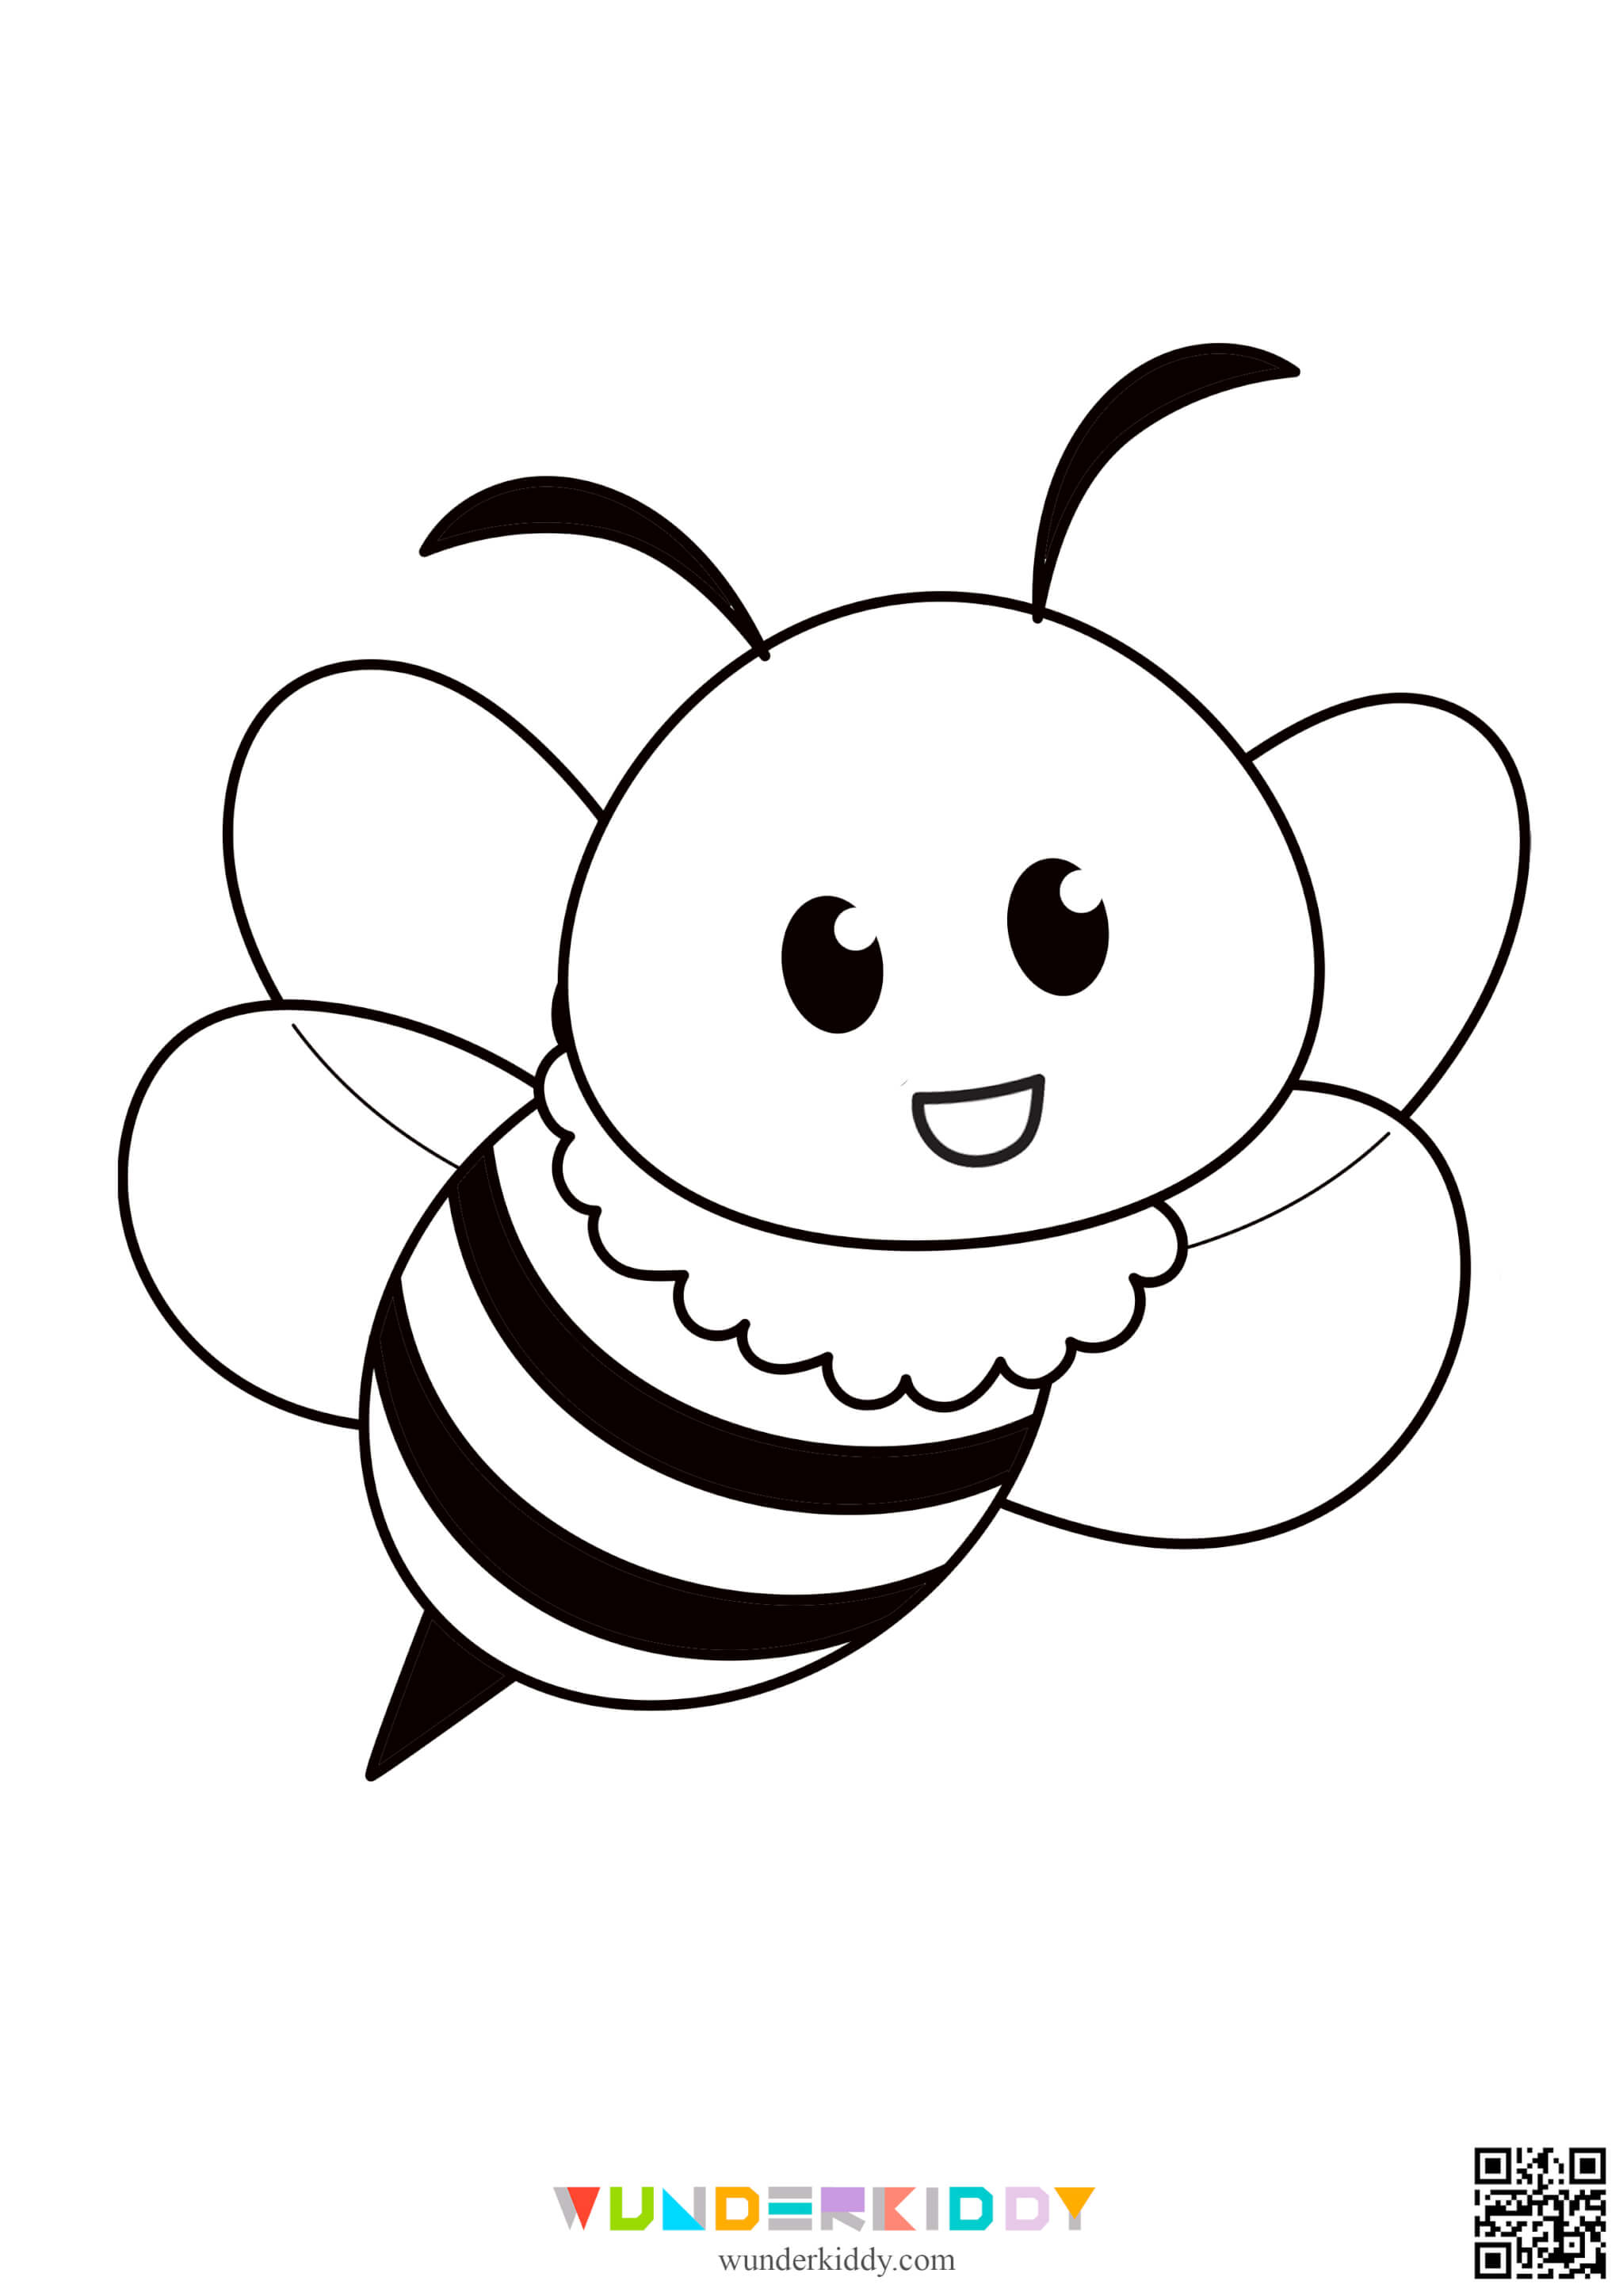 Free printable bee template for kindergarten craft